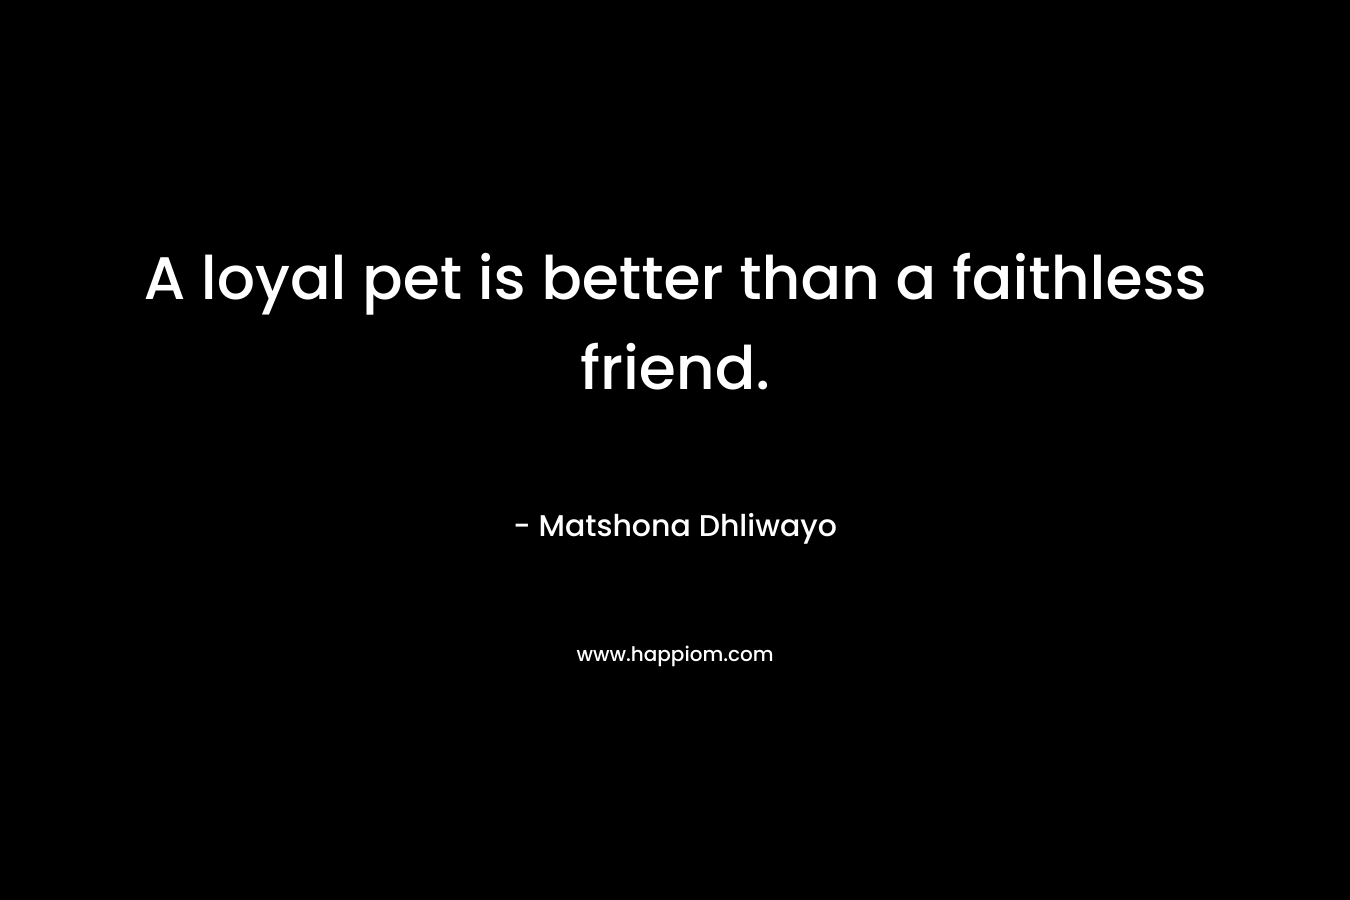 A loyal pet is better than a faithless friend.